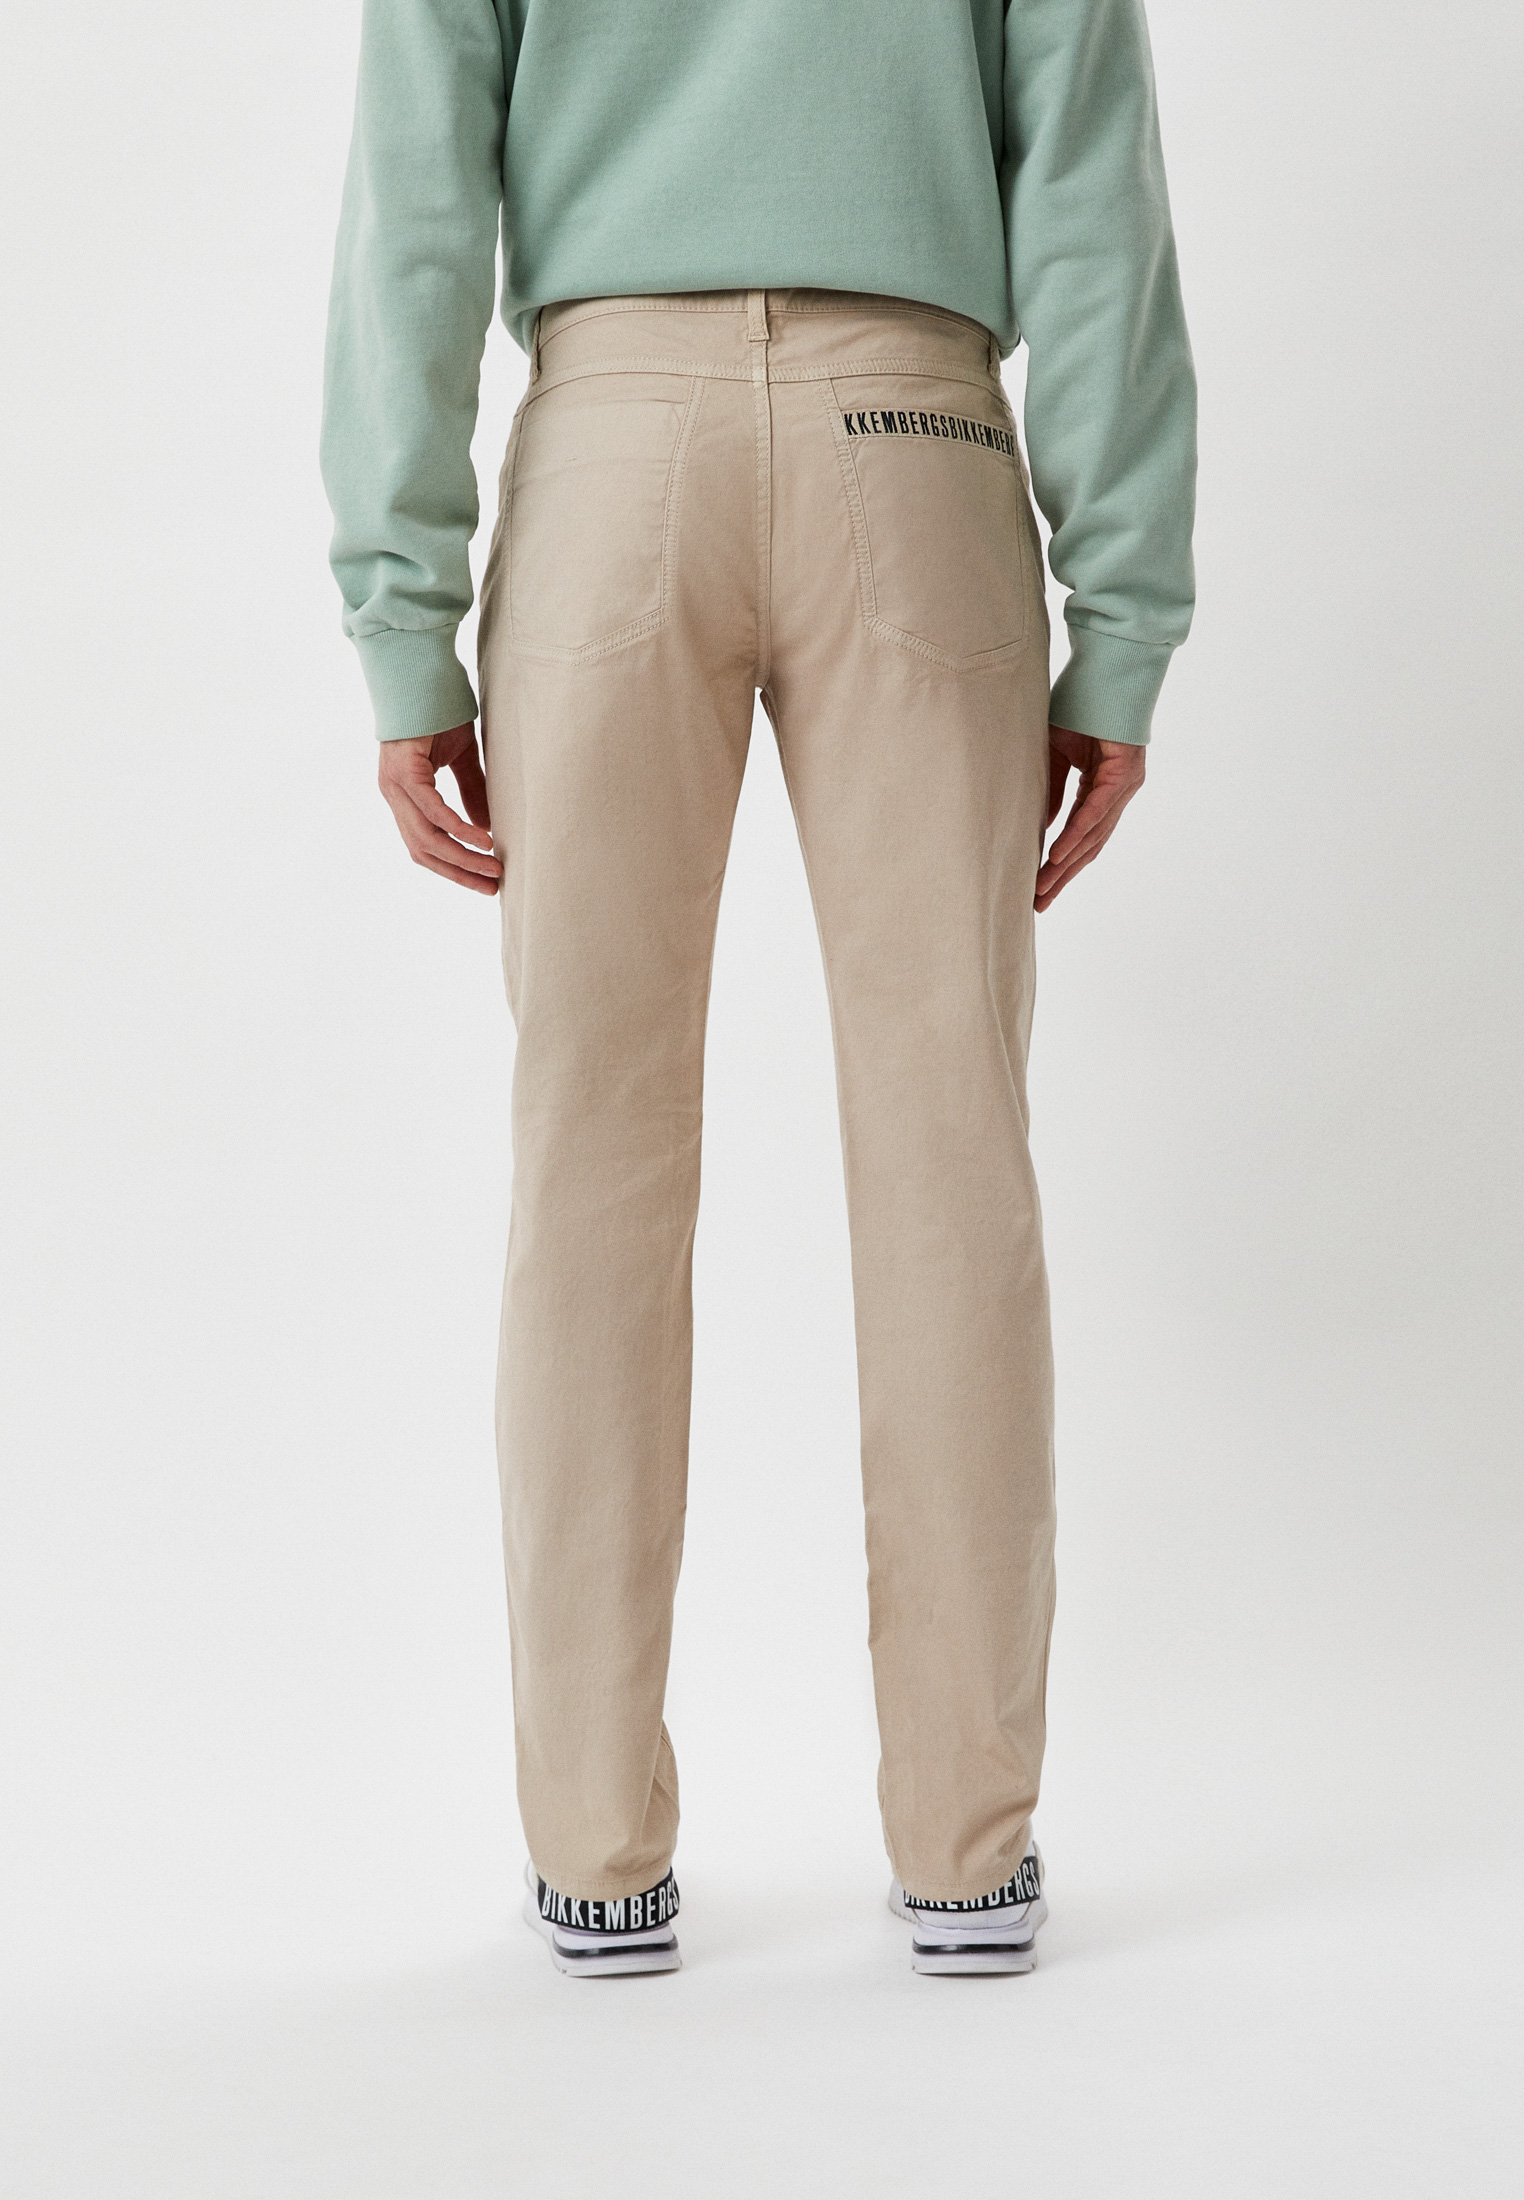 Мужские повседневные брюки Bikkembergs (Биккембергс) C Q 08B FD S B101: изображение 3